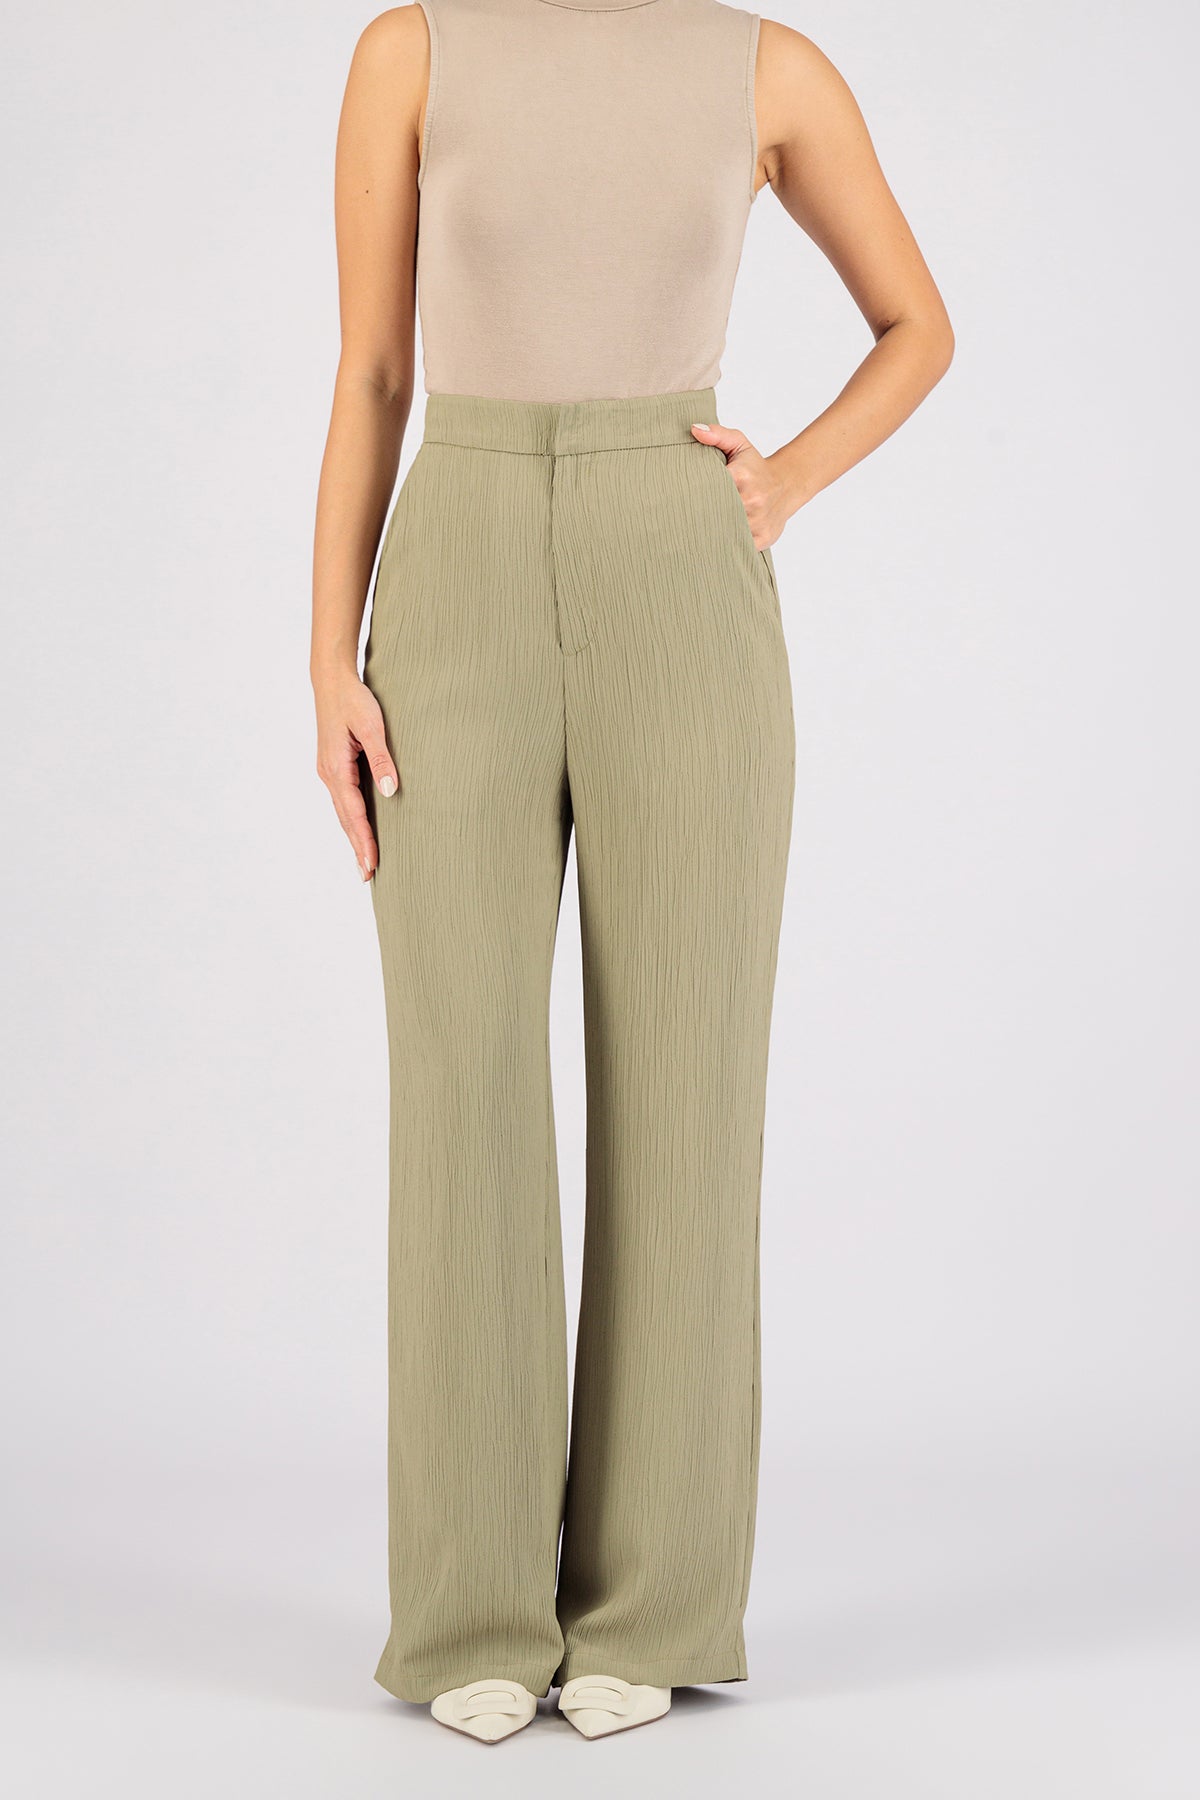 US - Textured Dress Pants - Khaki Green